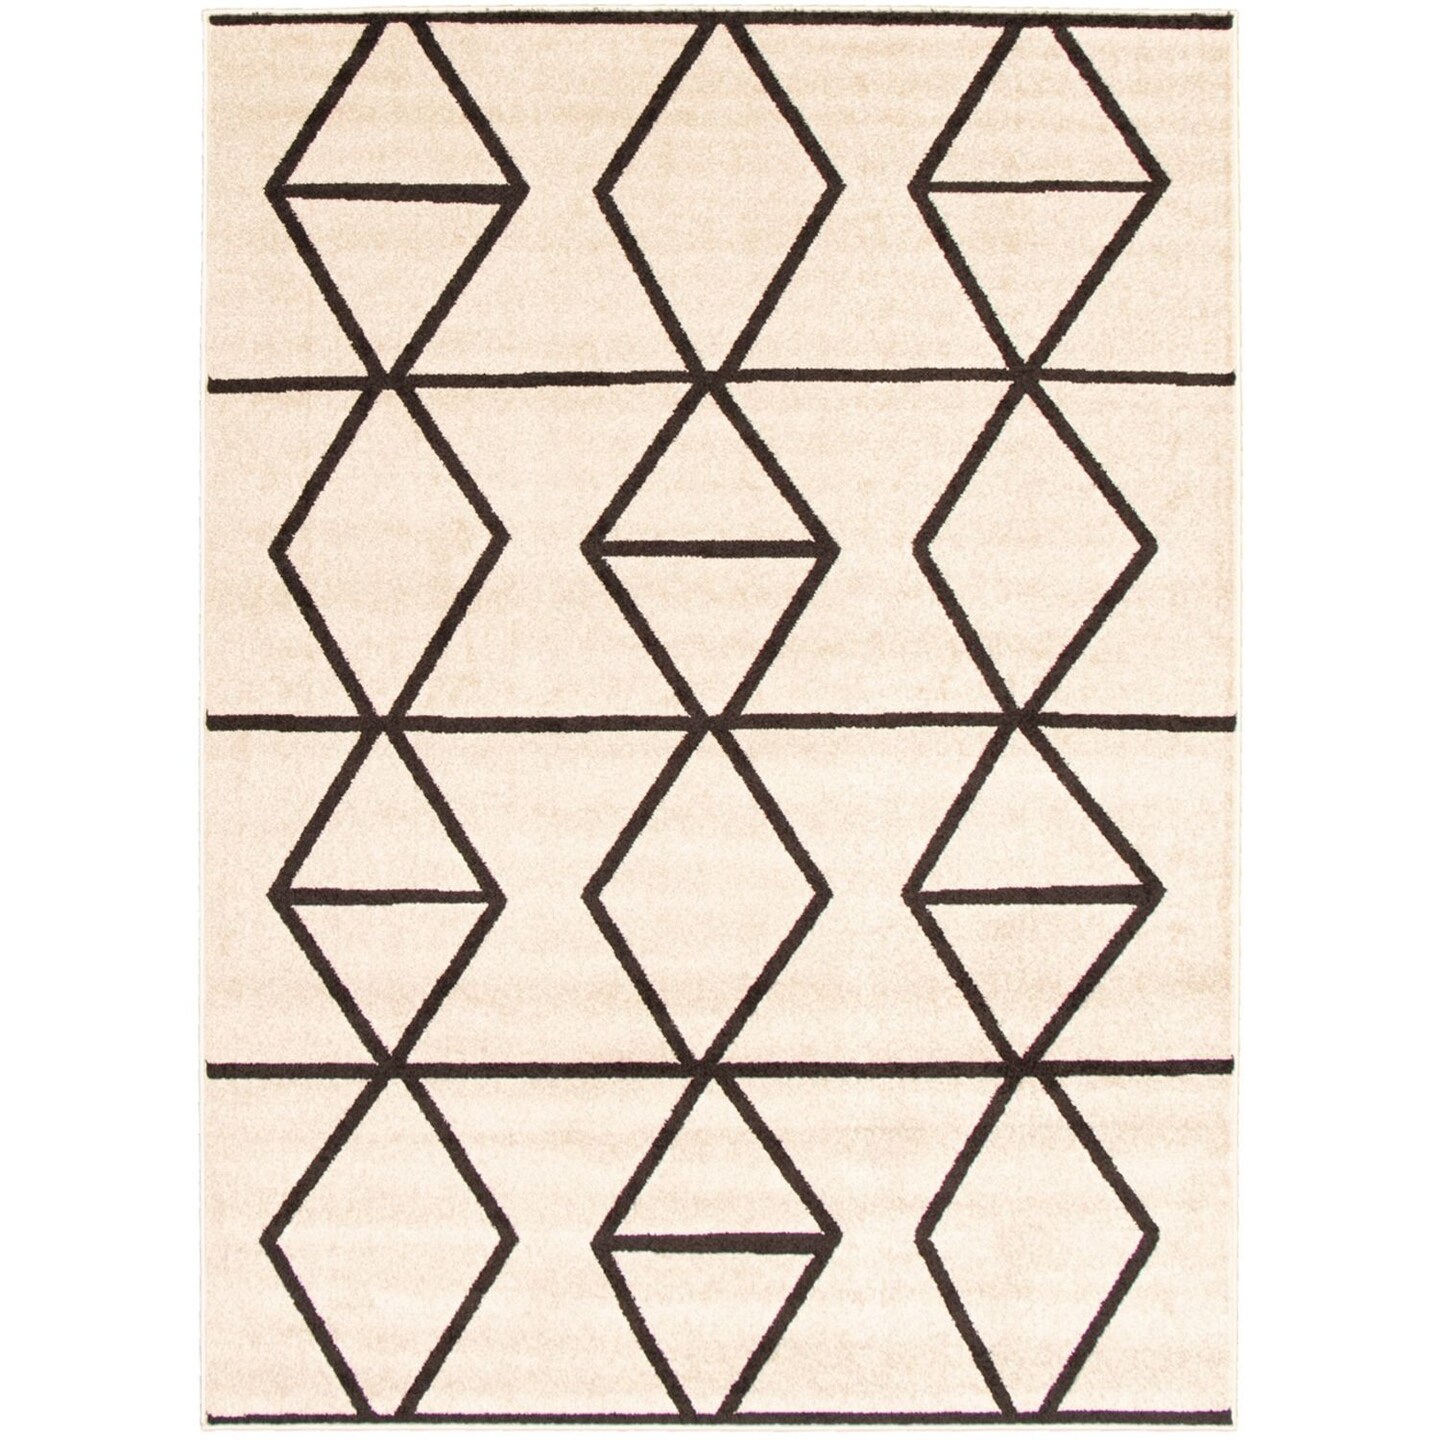 Chaudhary Living Geometric Moroccan Rectangular Area Throw Rug - 7.75&#x27; x 10&#x27; - Cream and Brown